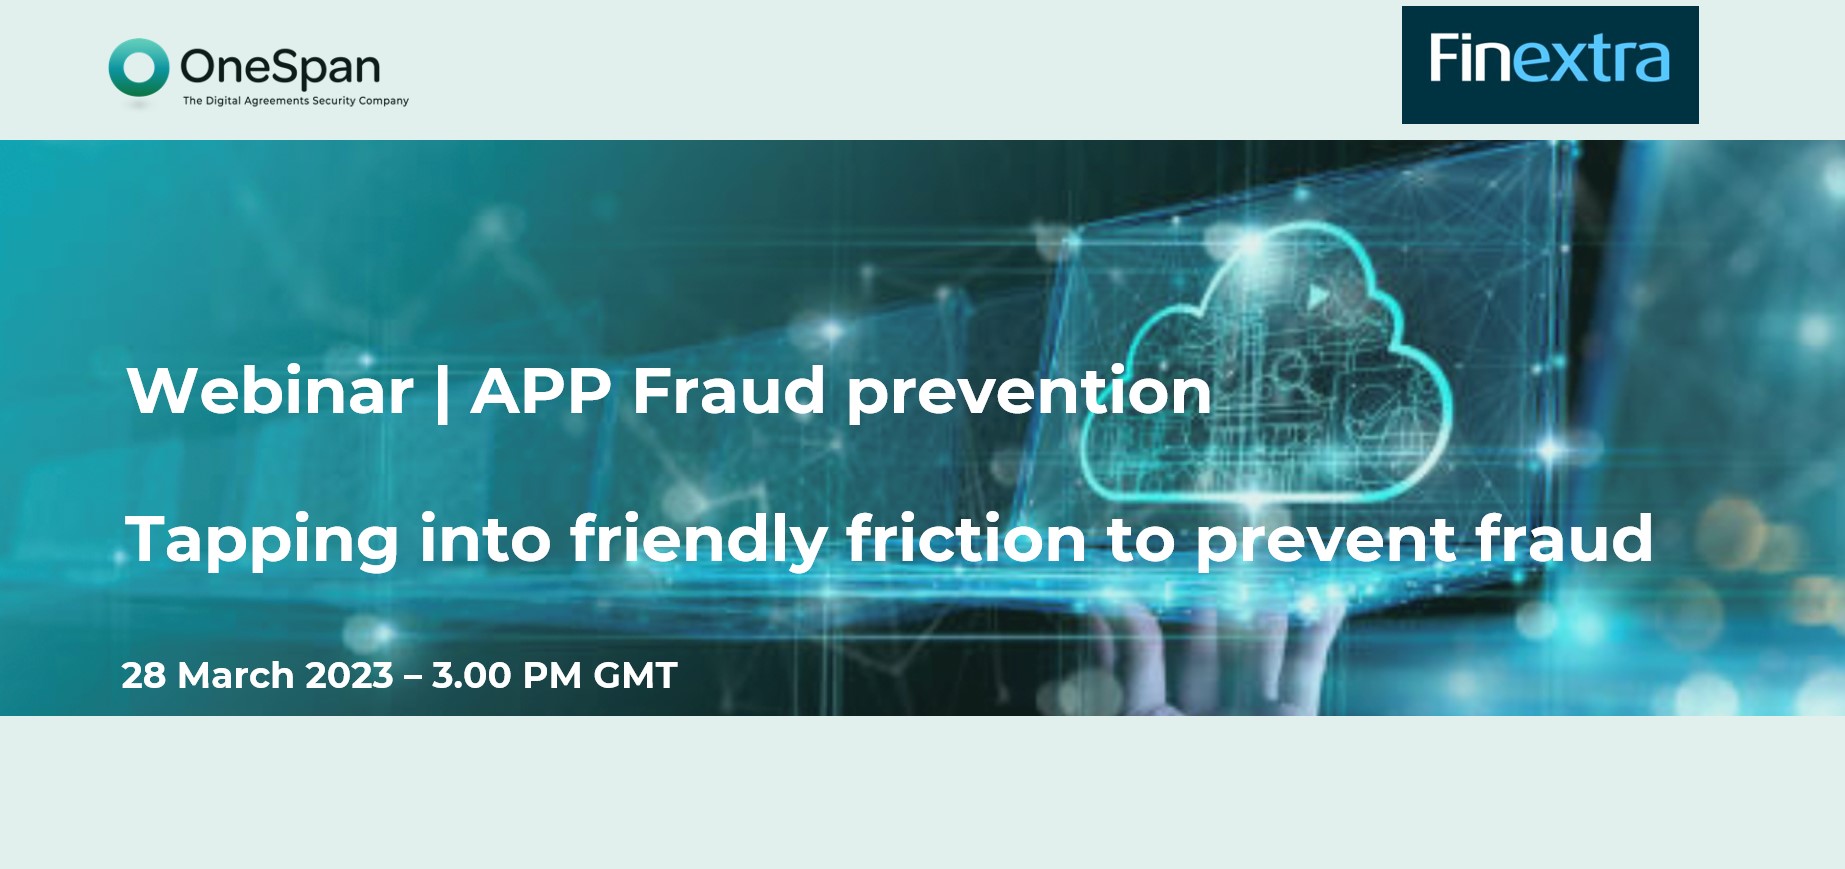 Webinar Finextra Prevent APP Fraud